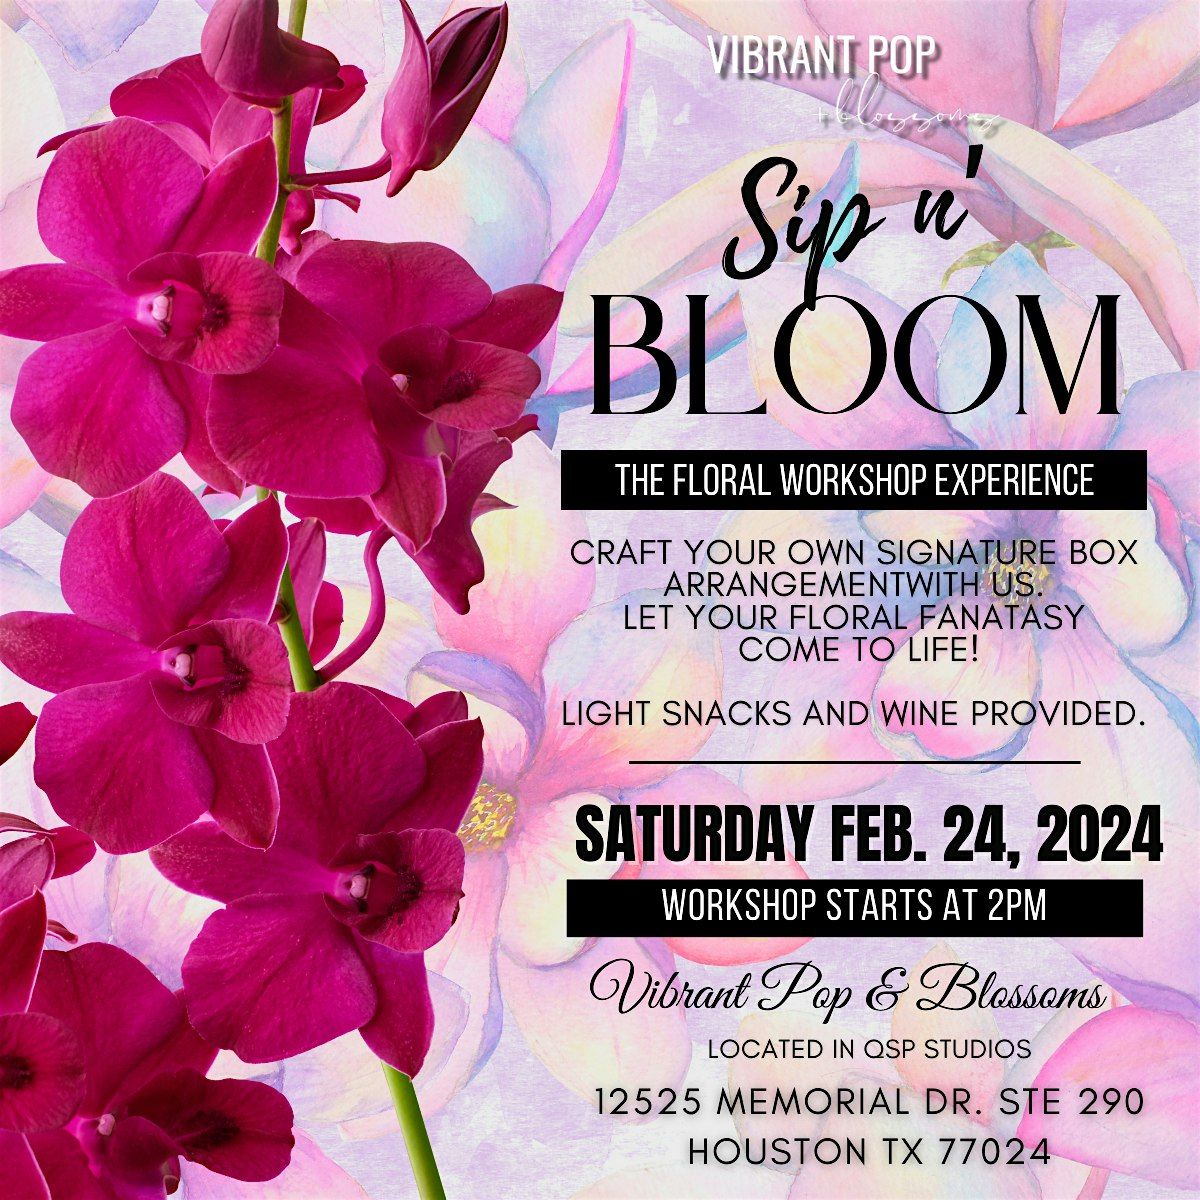 Copy of Vibrant Pop & Blossoms  *Sip n Bloom* Floral Experience Workshop